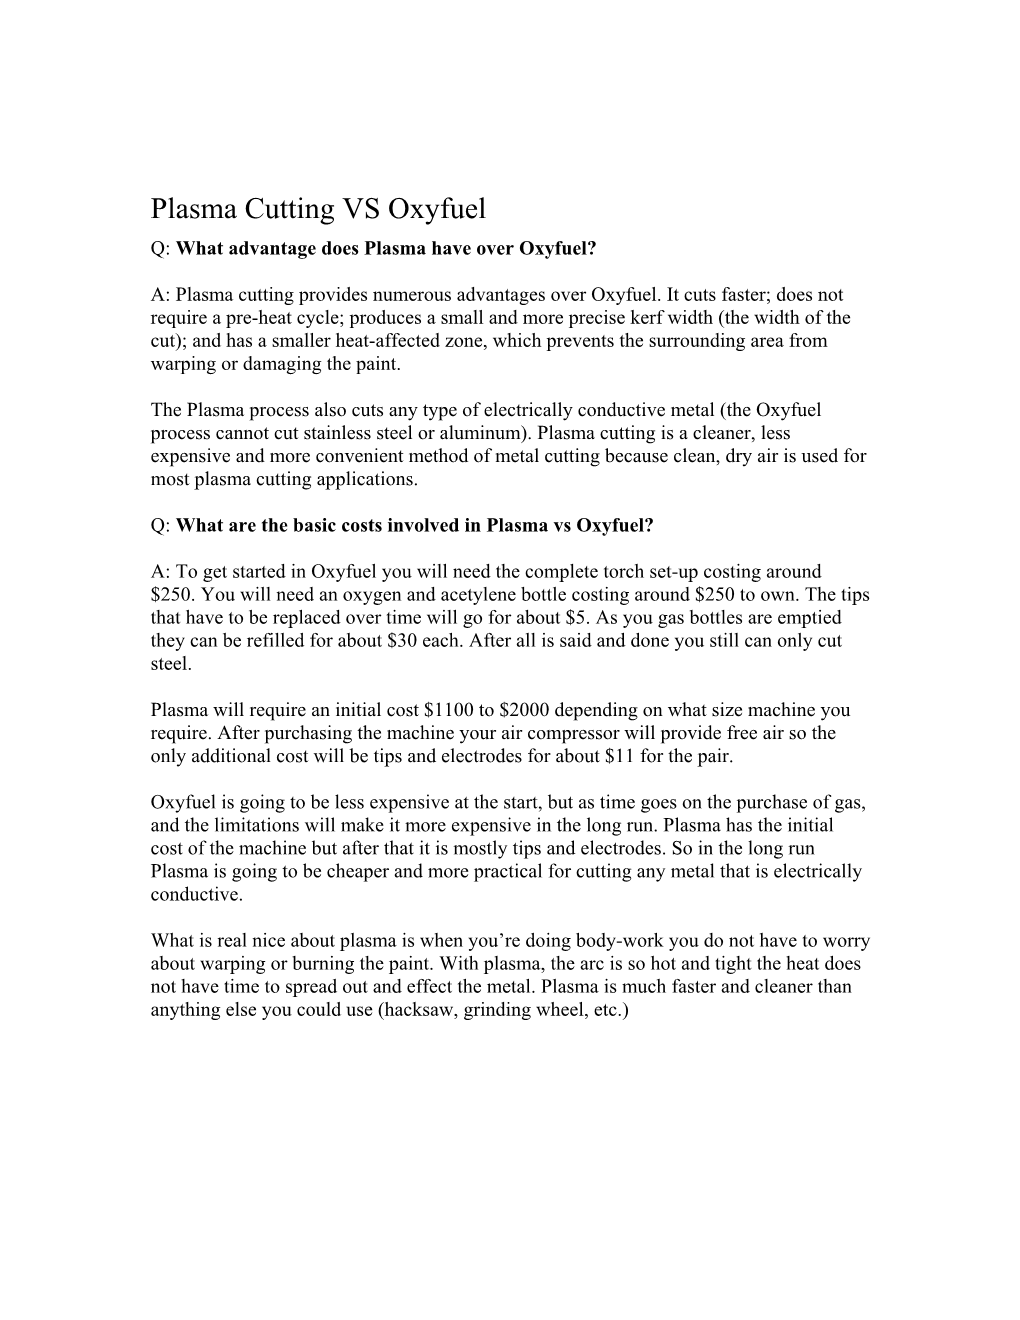 Plasma Cutting VS Oxyfuel Q: What Advantage Does Plasma Have Over Oxyfuel?